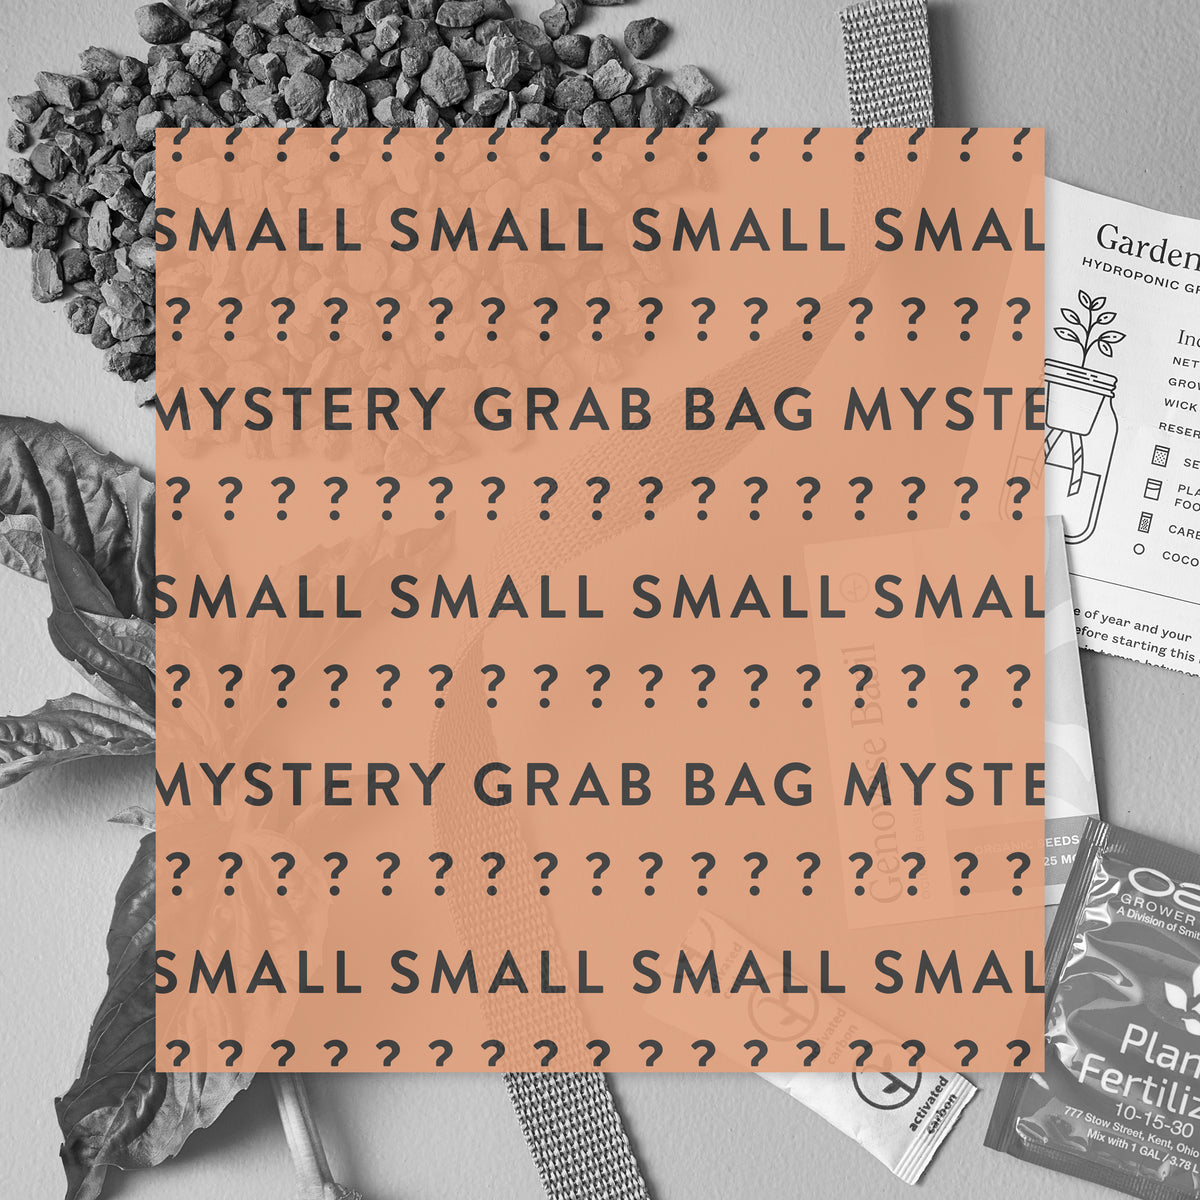 Mystery Grab Bag - Small